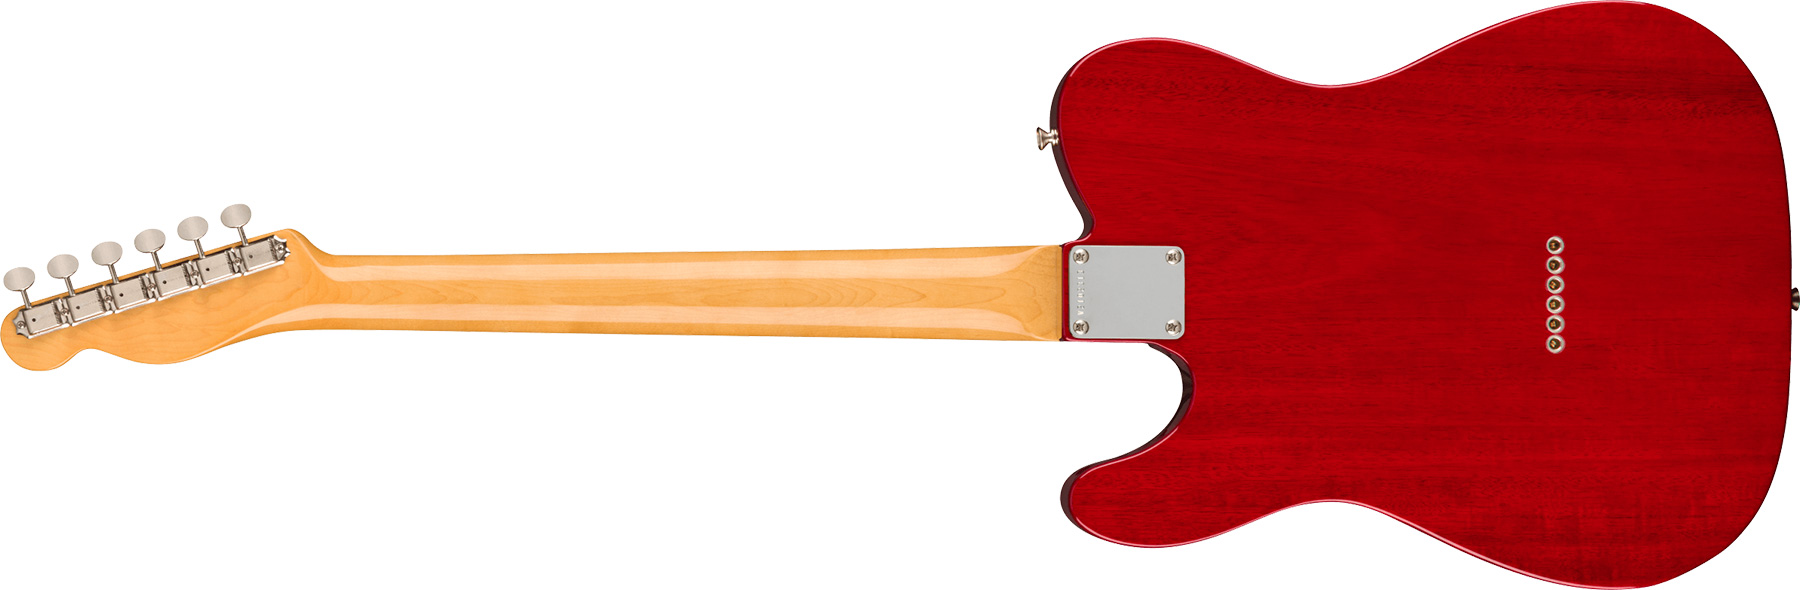 Fender Tele 1963 American Vintage Ii Usa 2s Ht Rw - Crimson Red Transparent - Televorm elektrische gitaar - Variation 1